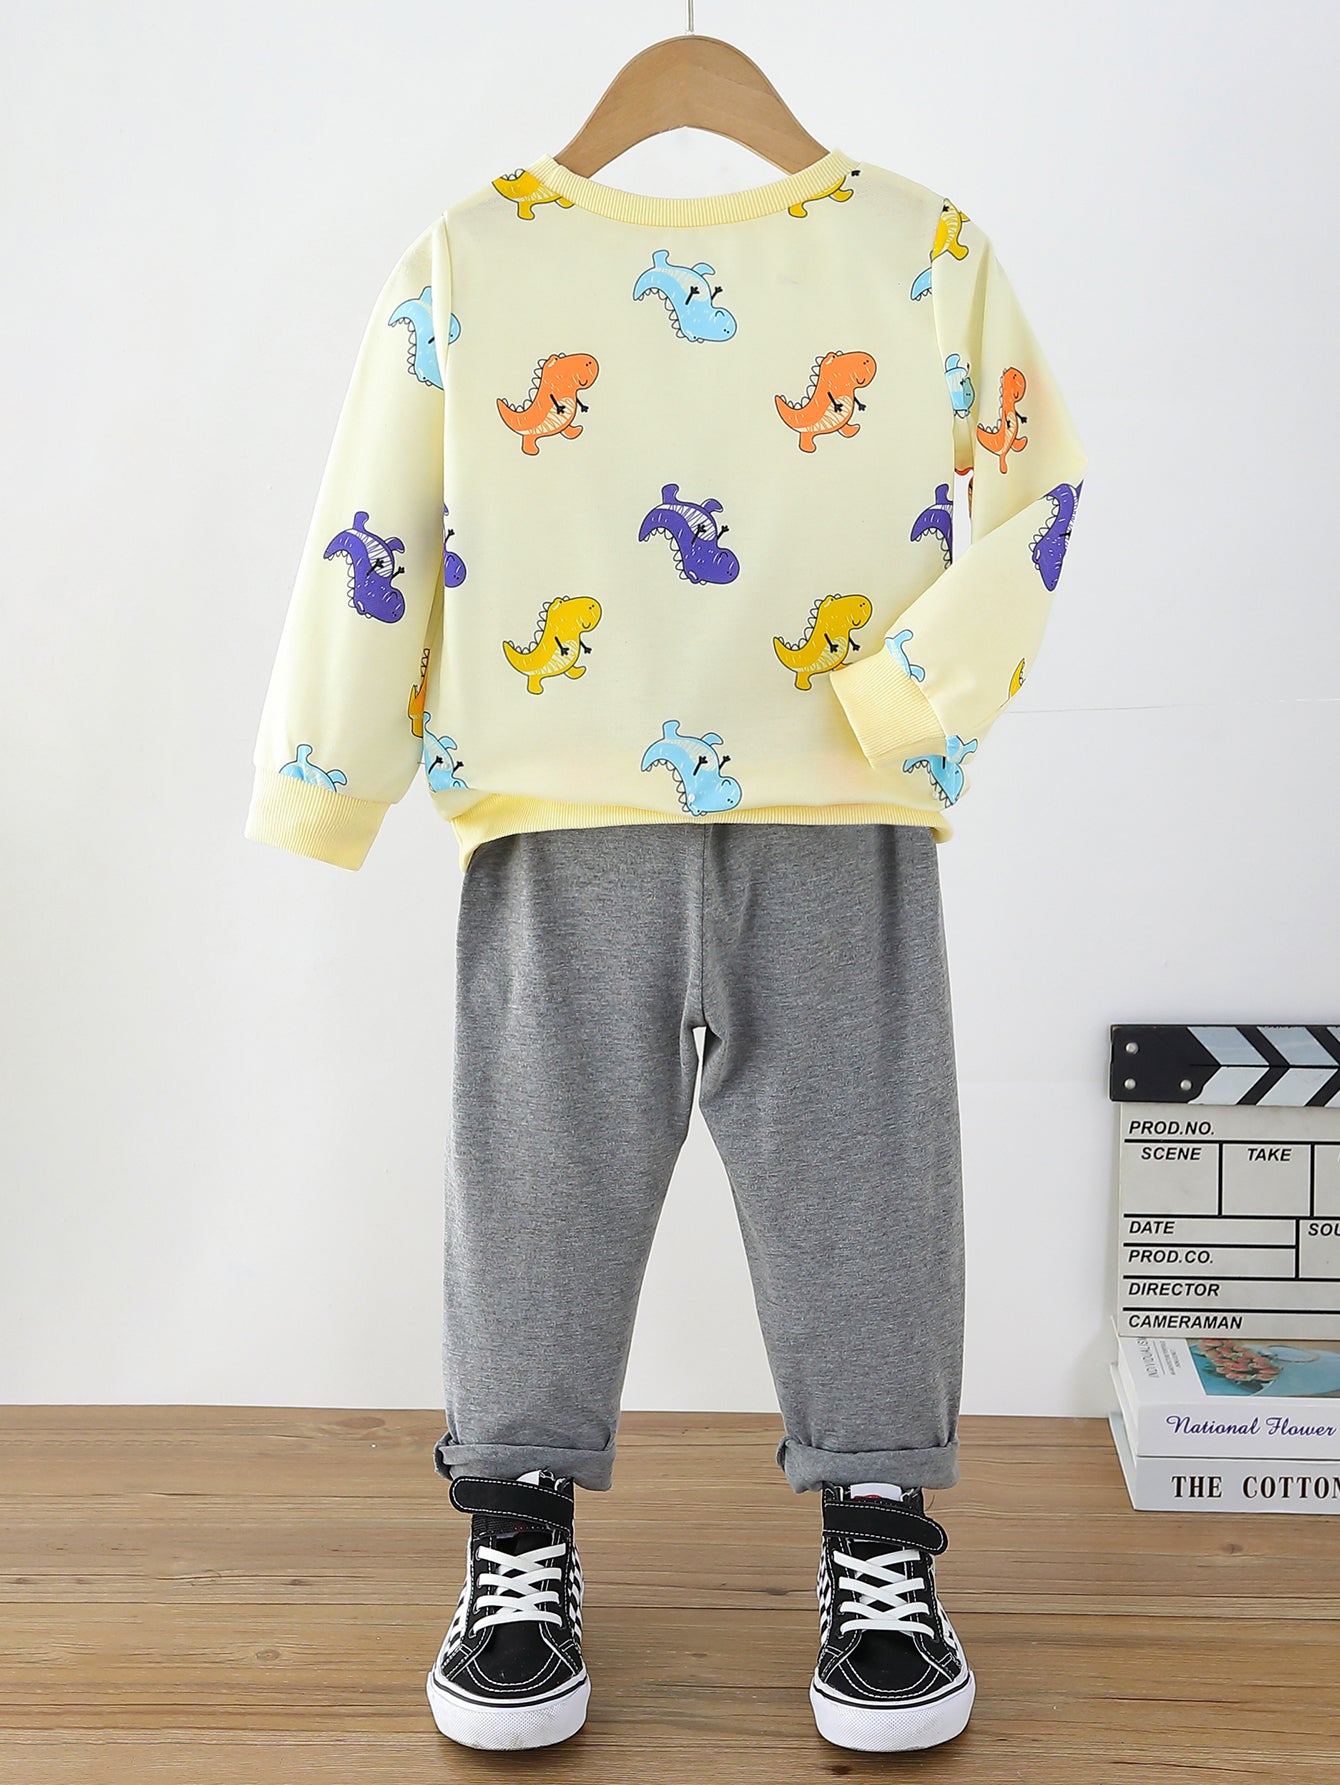 Boys Dinosaur Print Sweatshirt and Pants Set